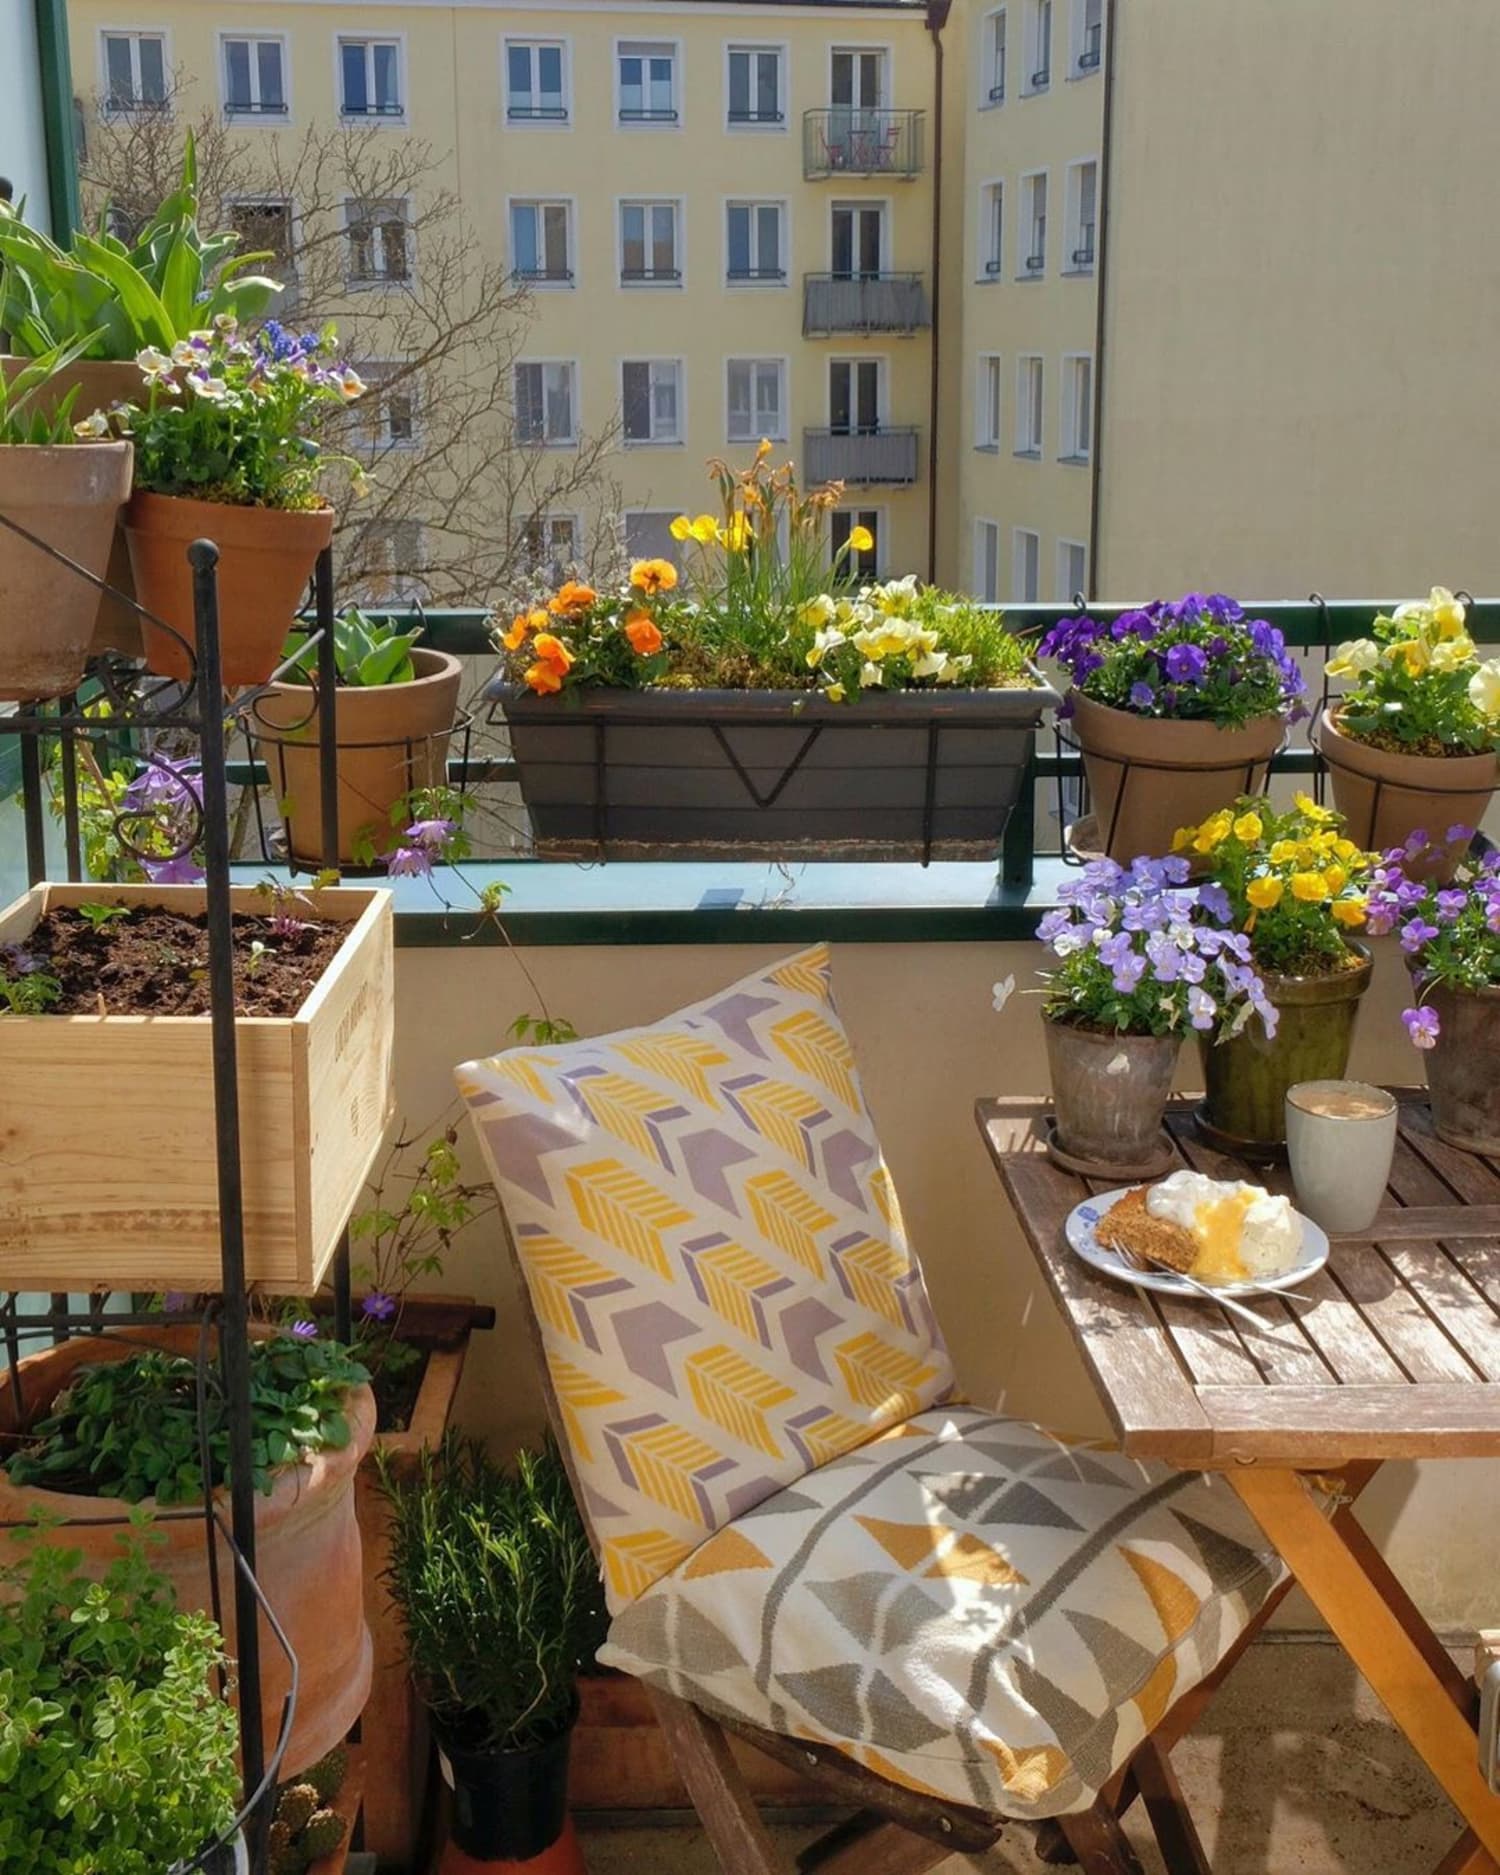 10 balcony garden ideas - how to grow plants on a small balcony